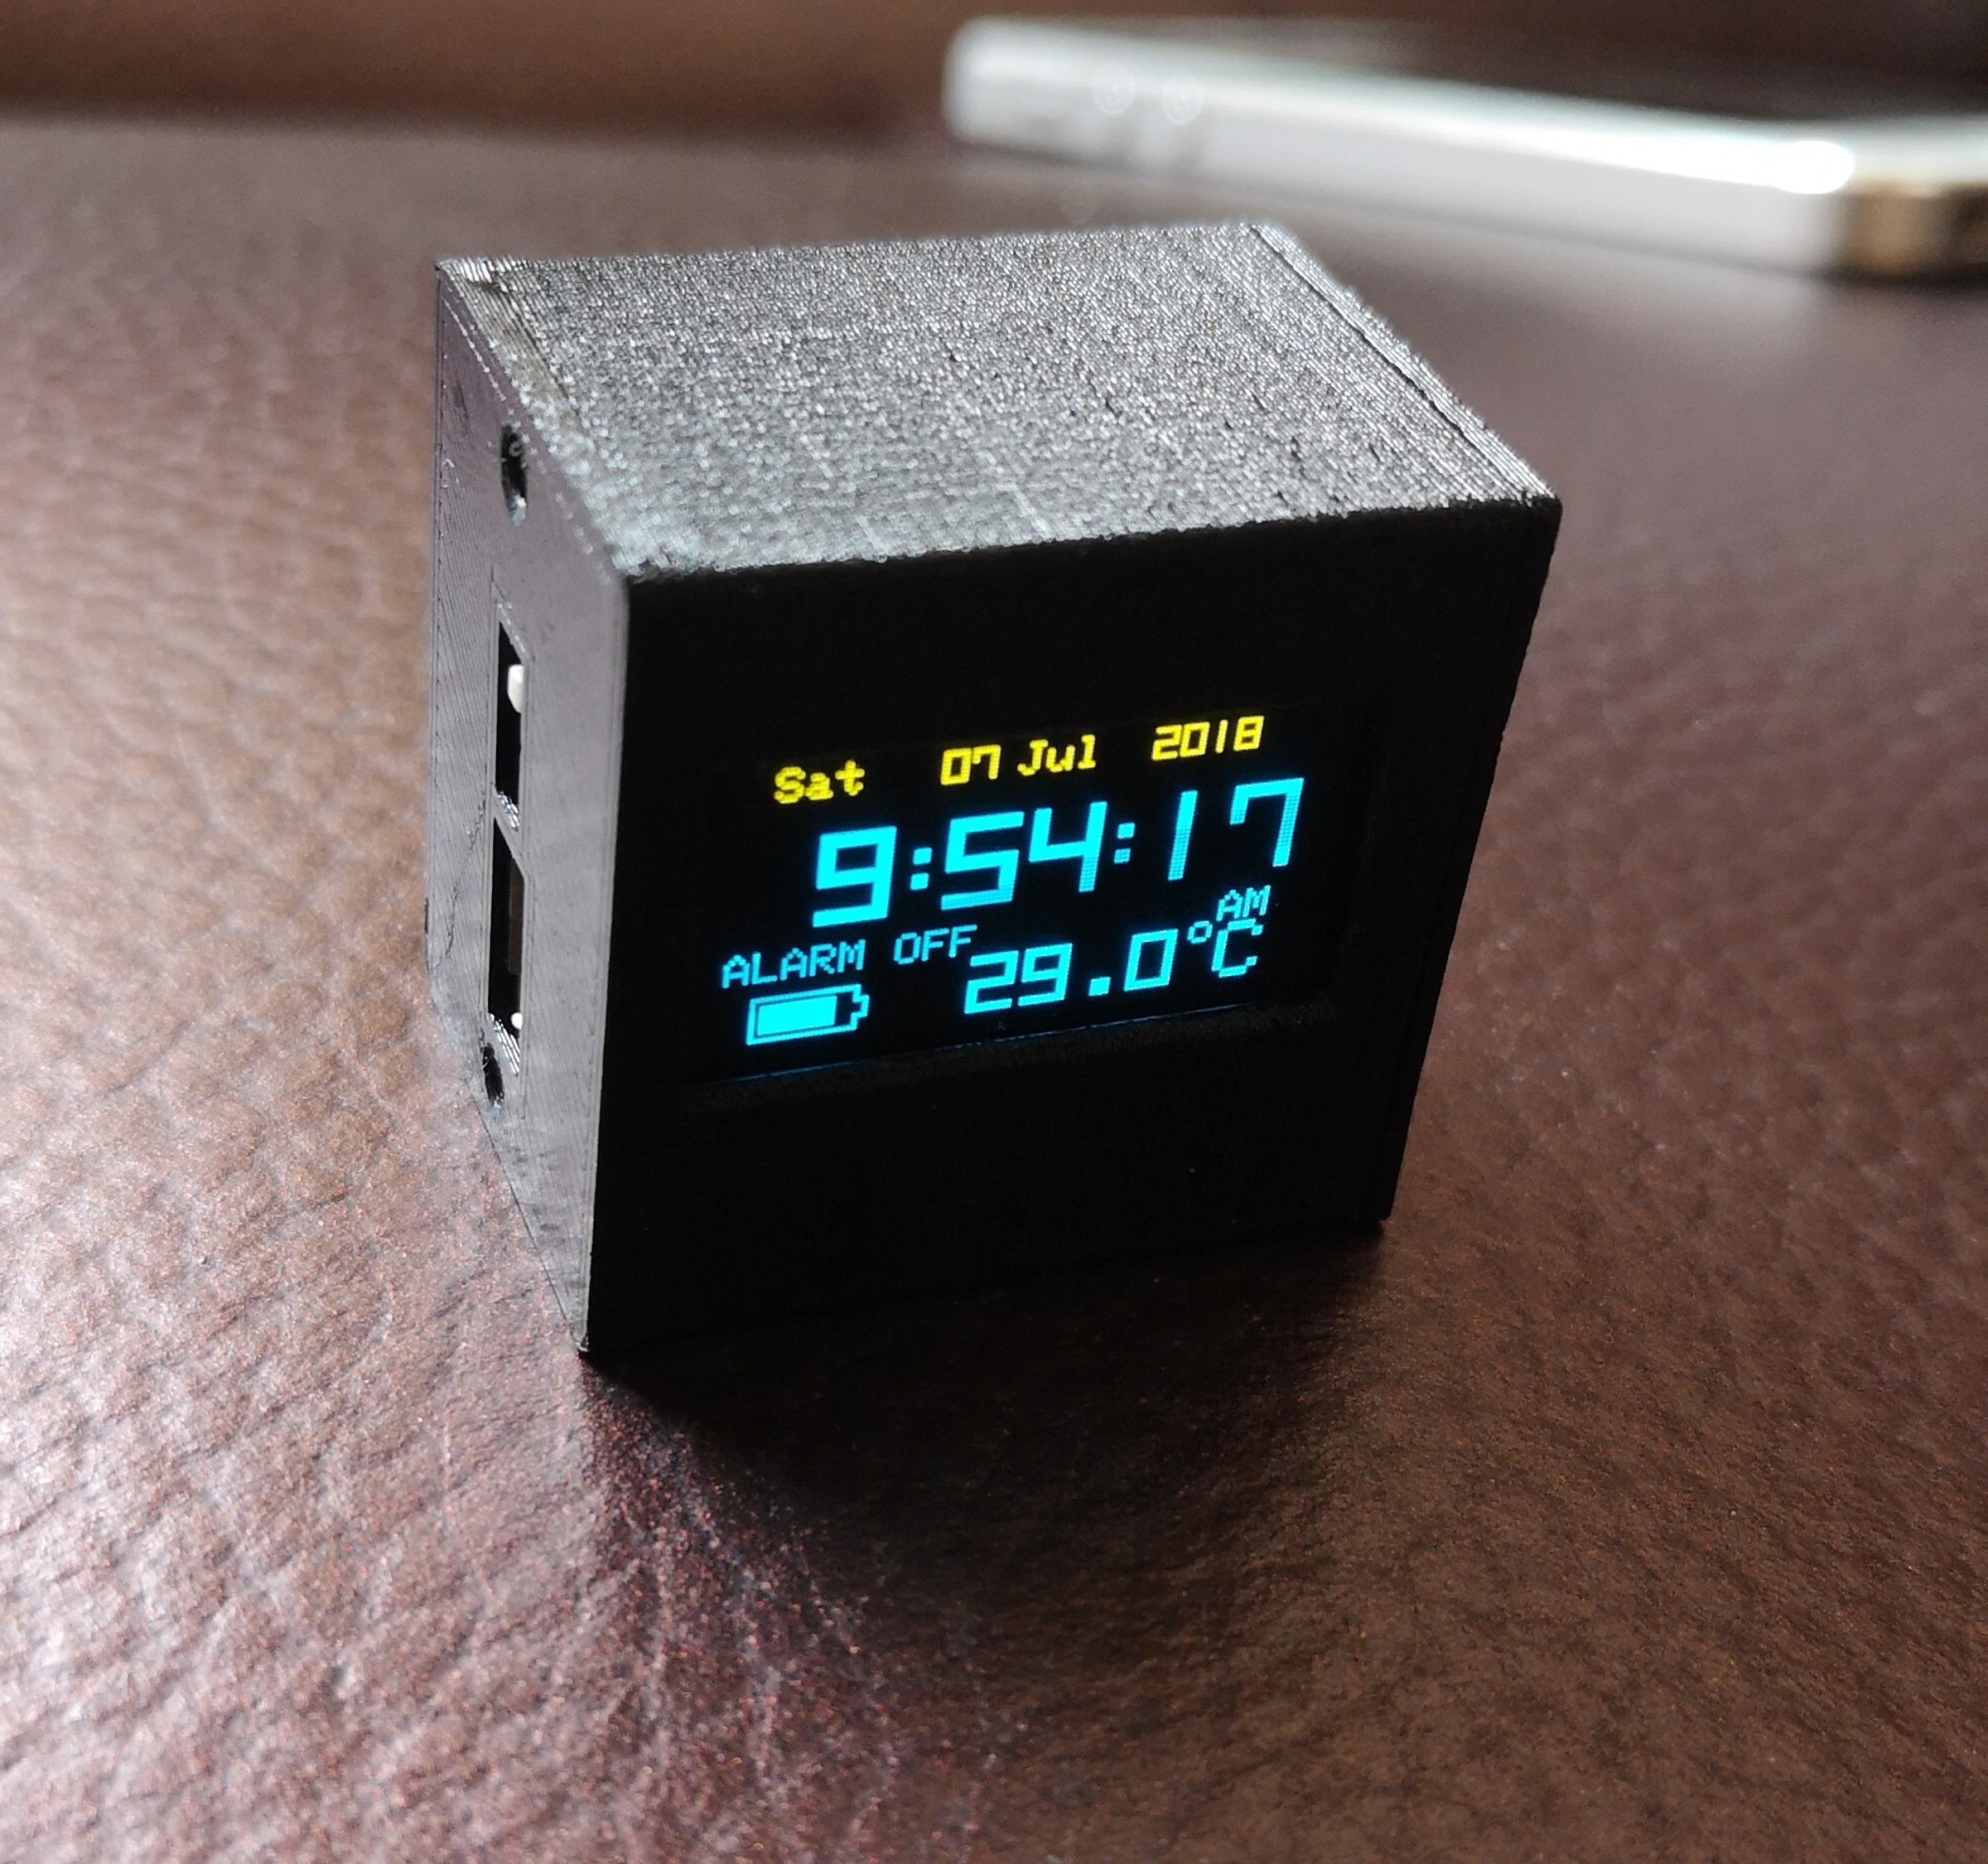 NEW Version OLEDiUNO Clock with Temp, Volt, Alarm from Phoenix CNC ...